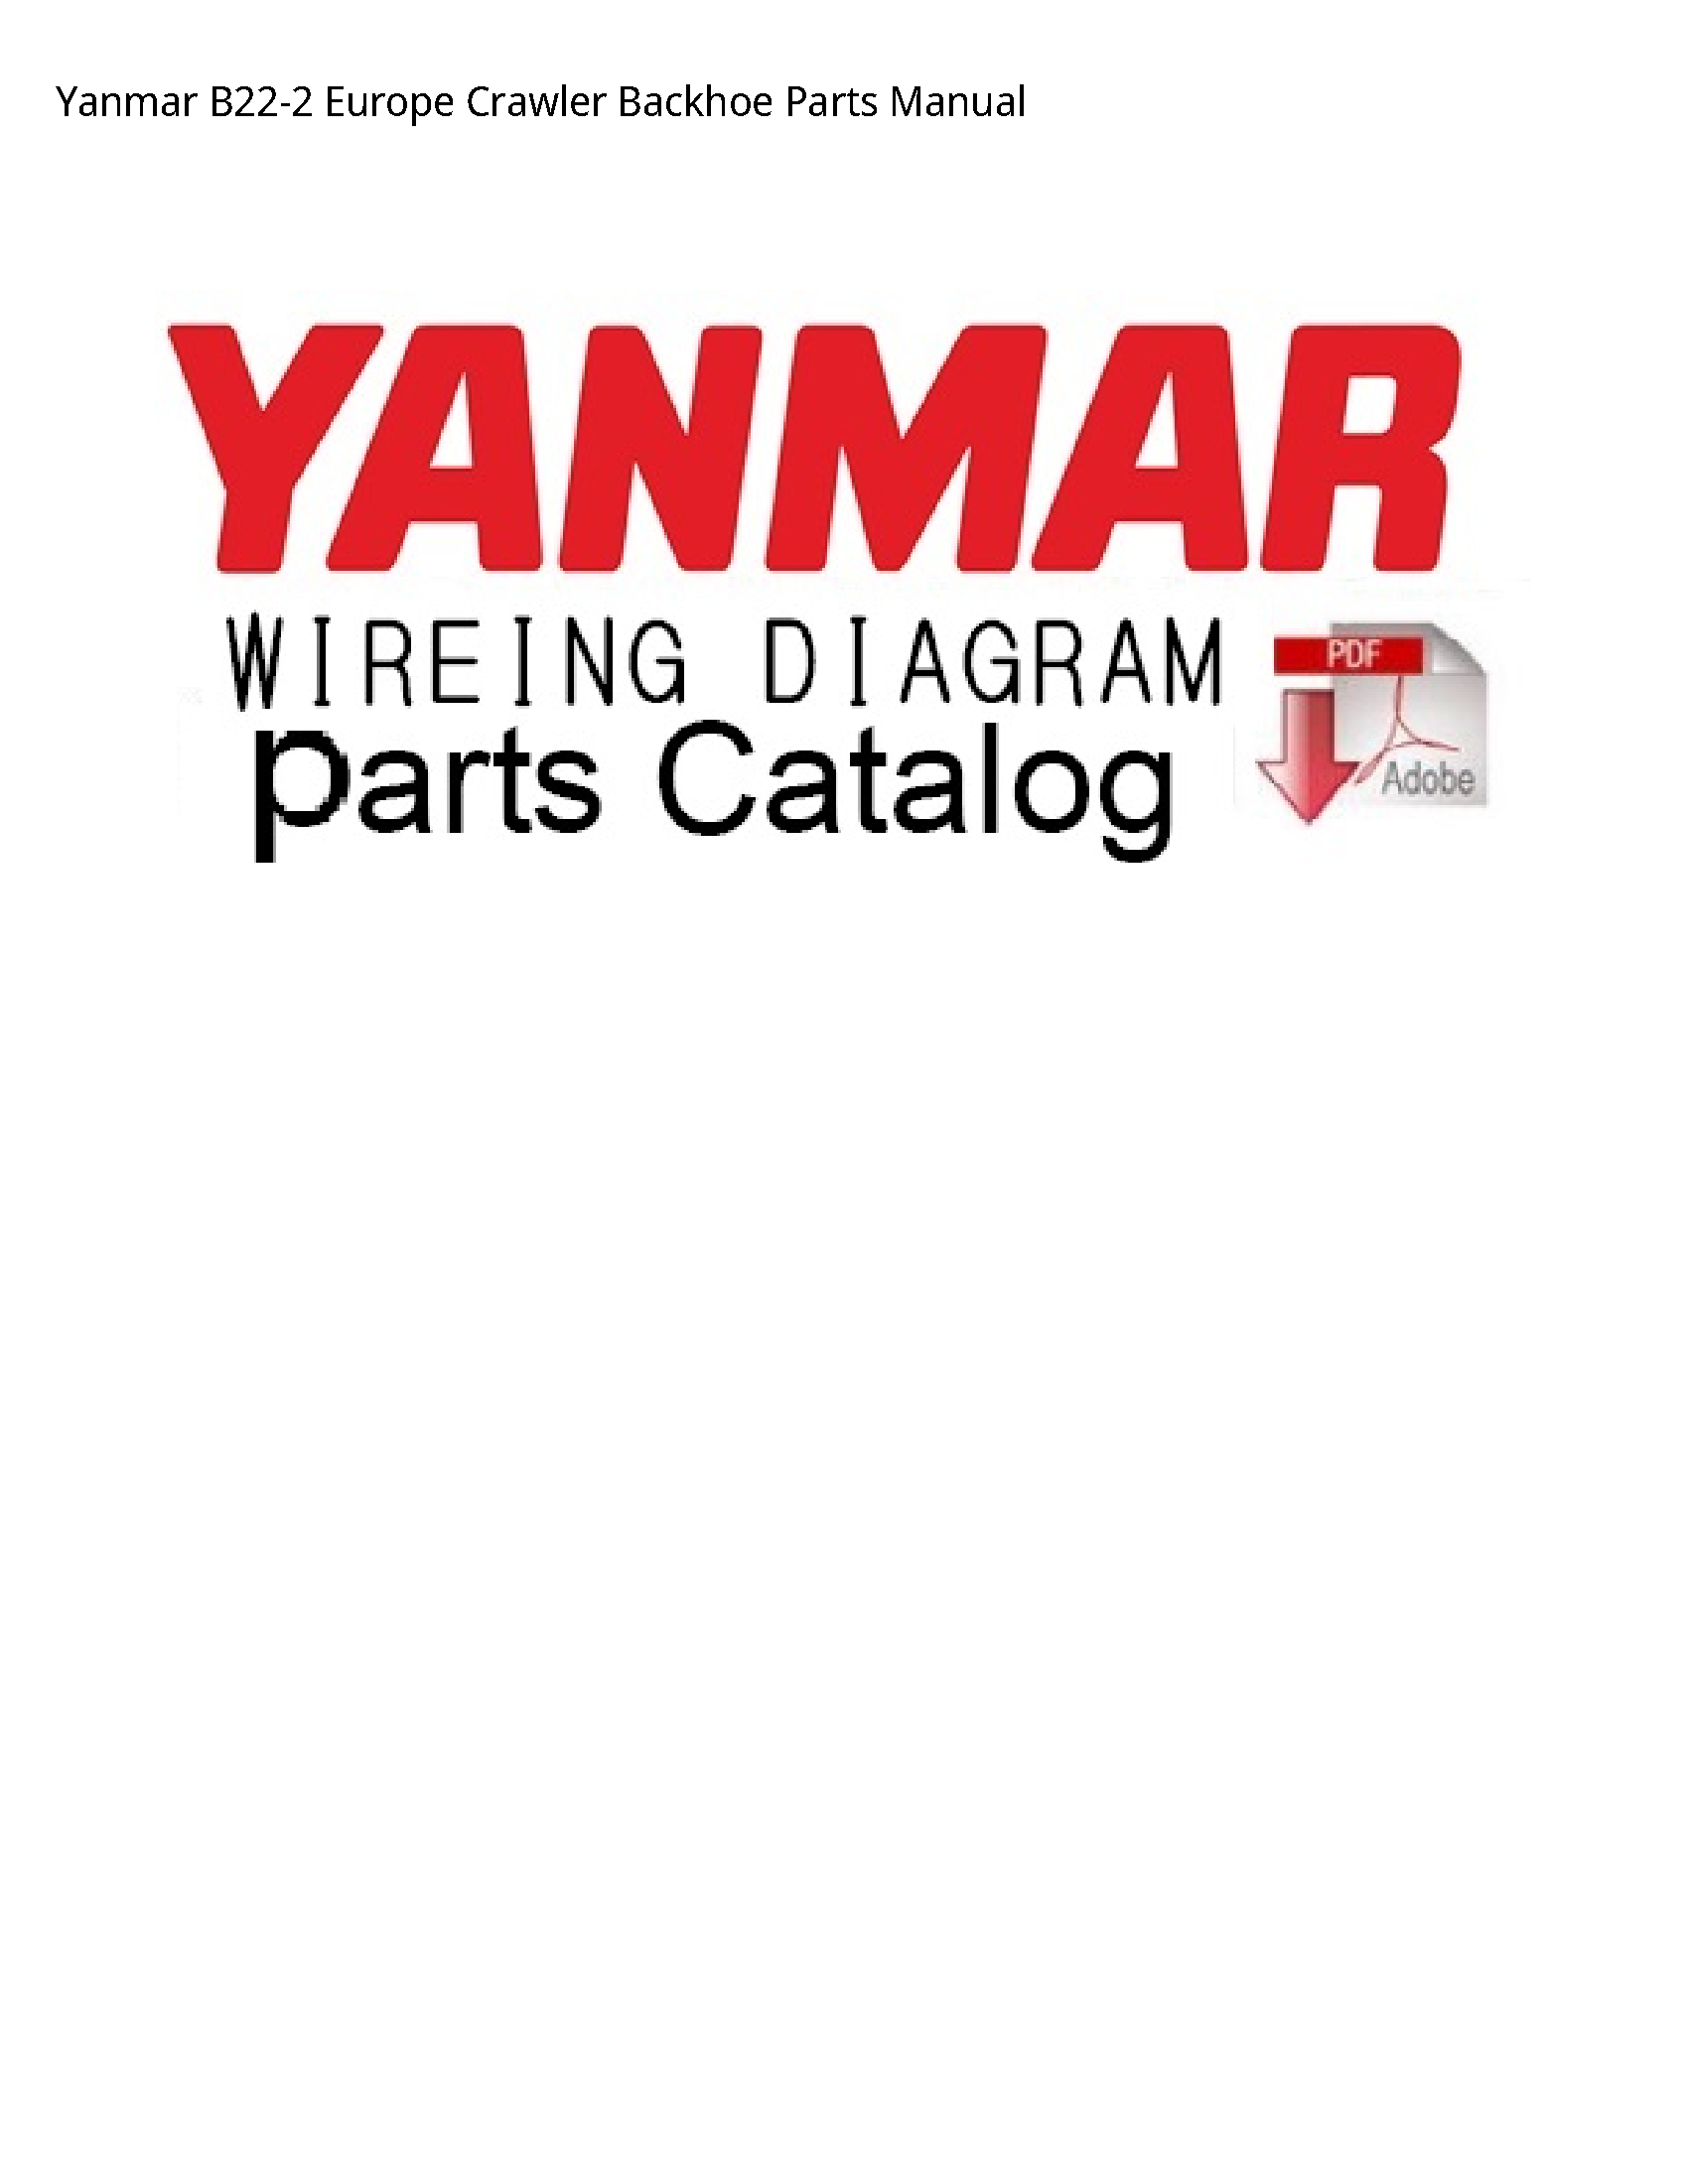 Yanmar B22-2 Europe Crawler Backhoe Parts manual